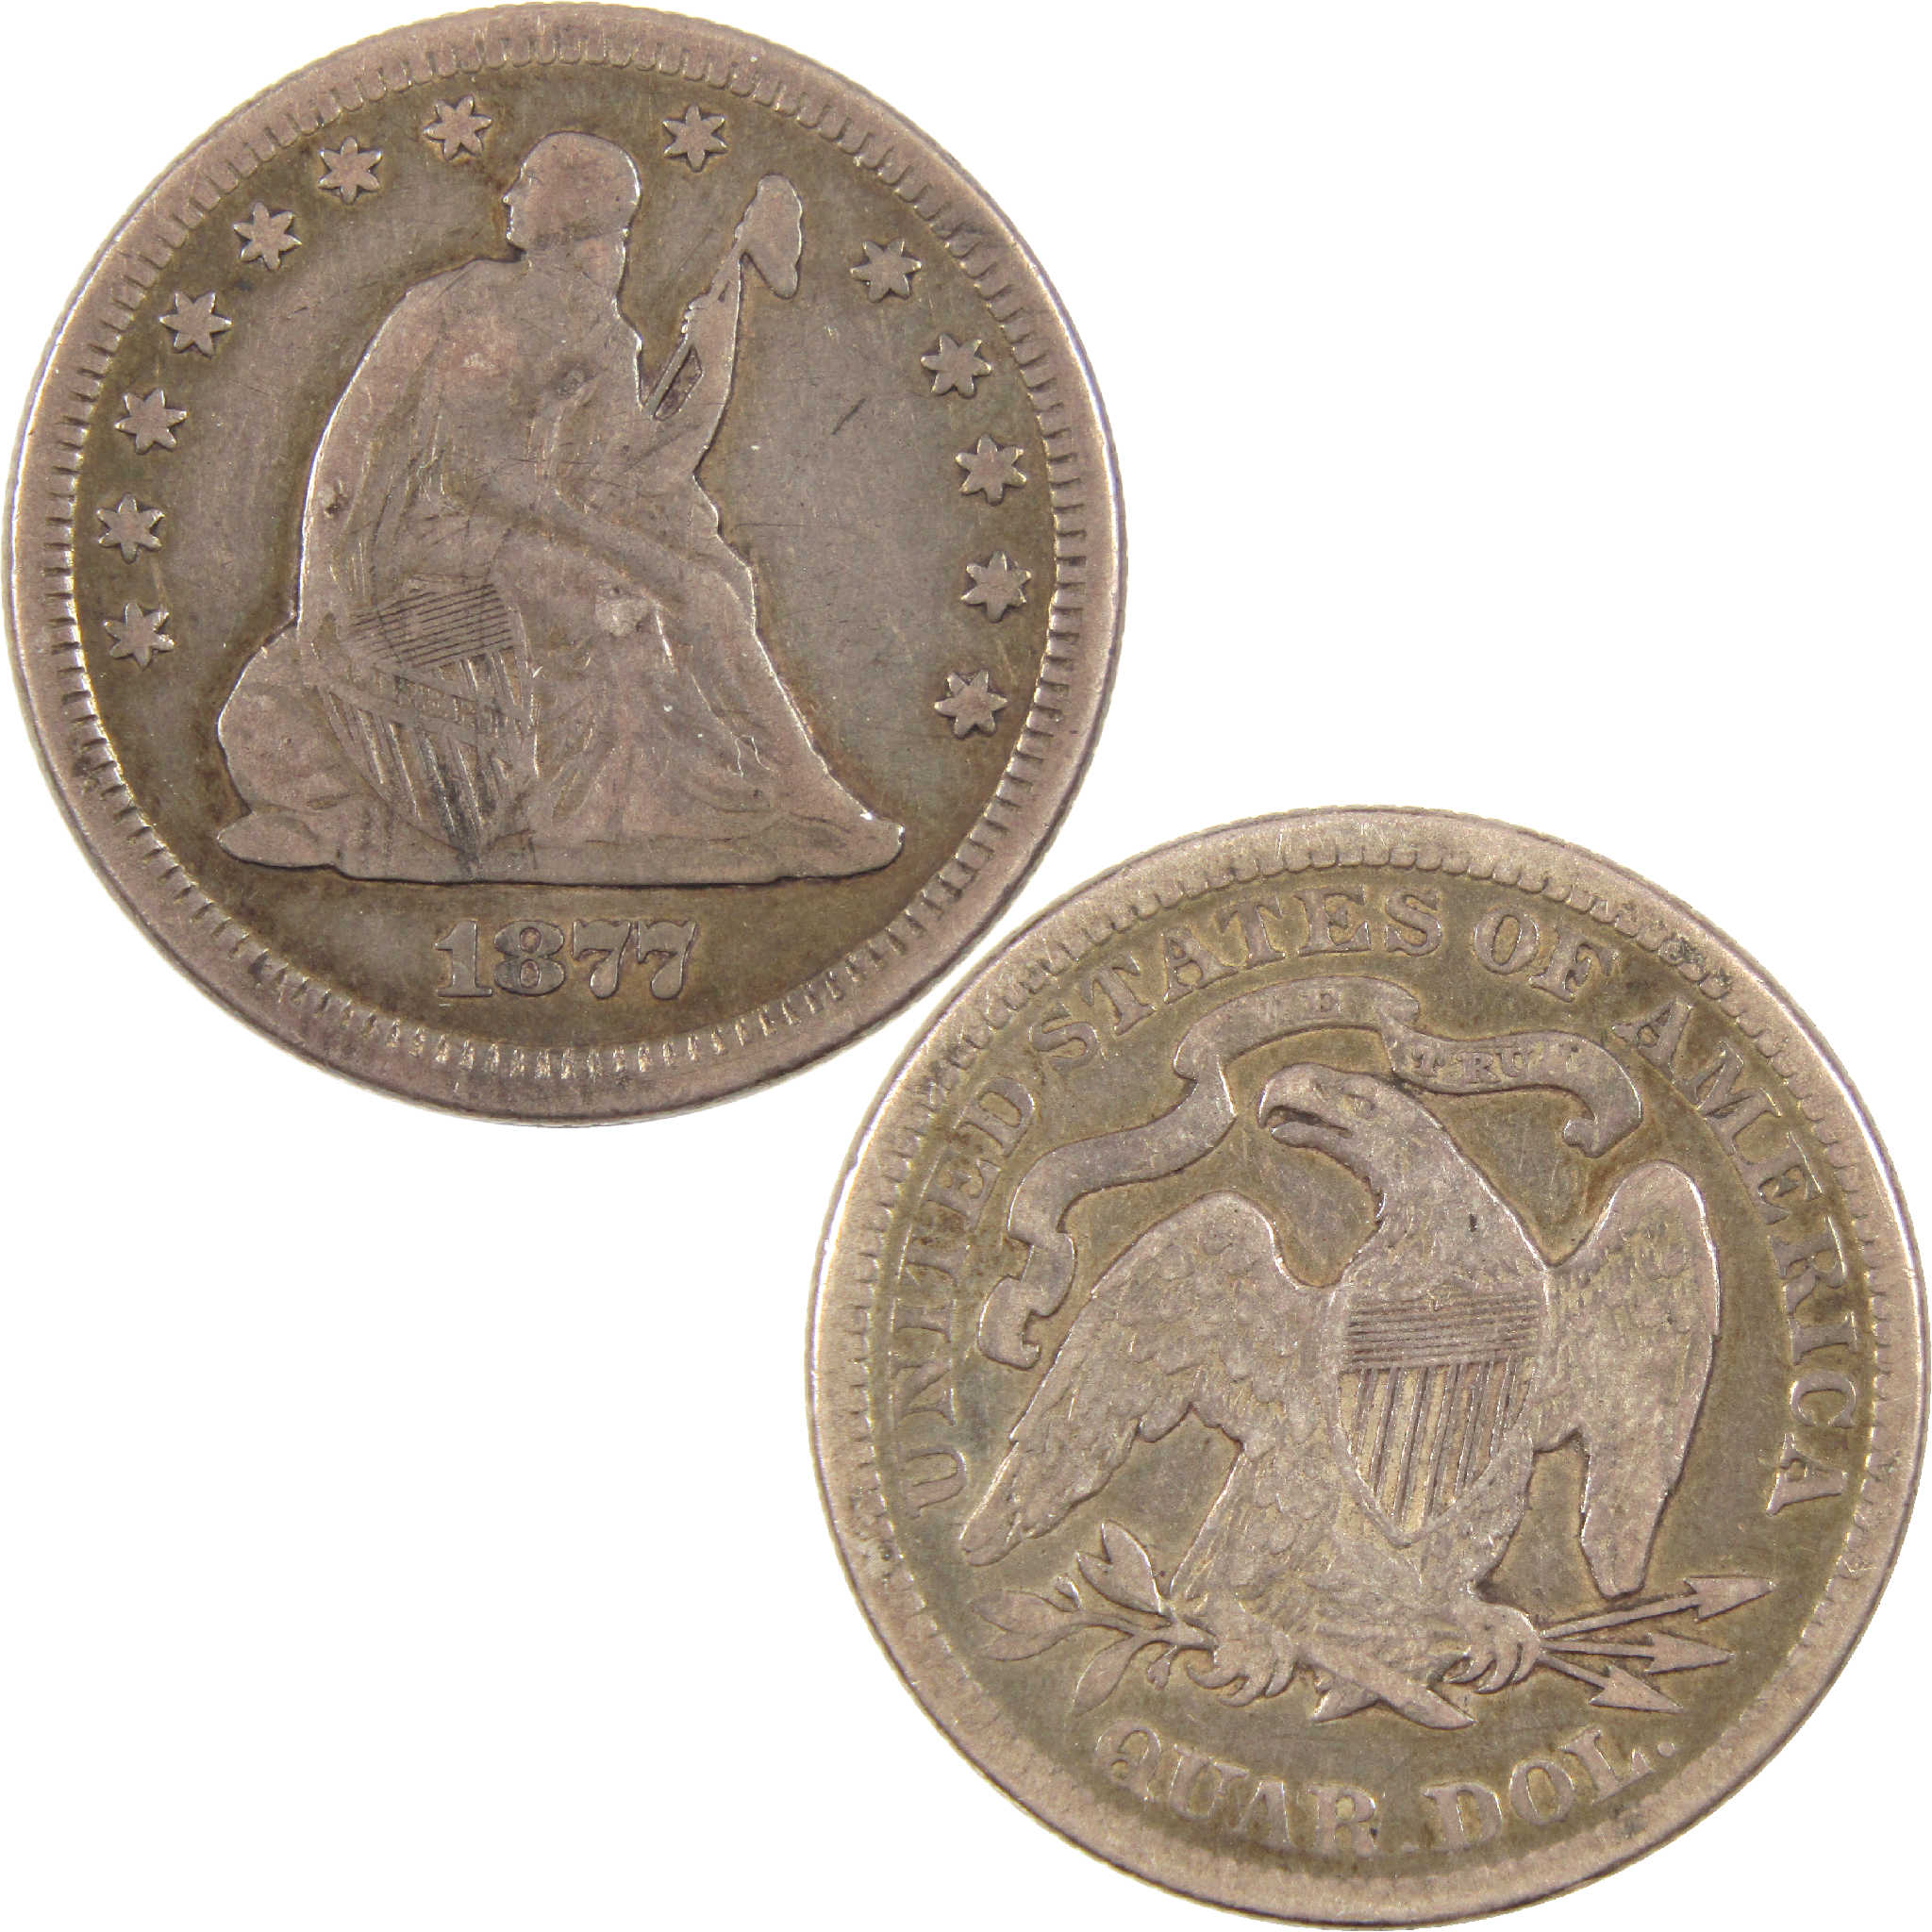 1877 Seated Liberty Quarter VF Very Fine Silver 25c Coin SKU:I11414